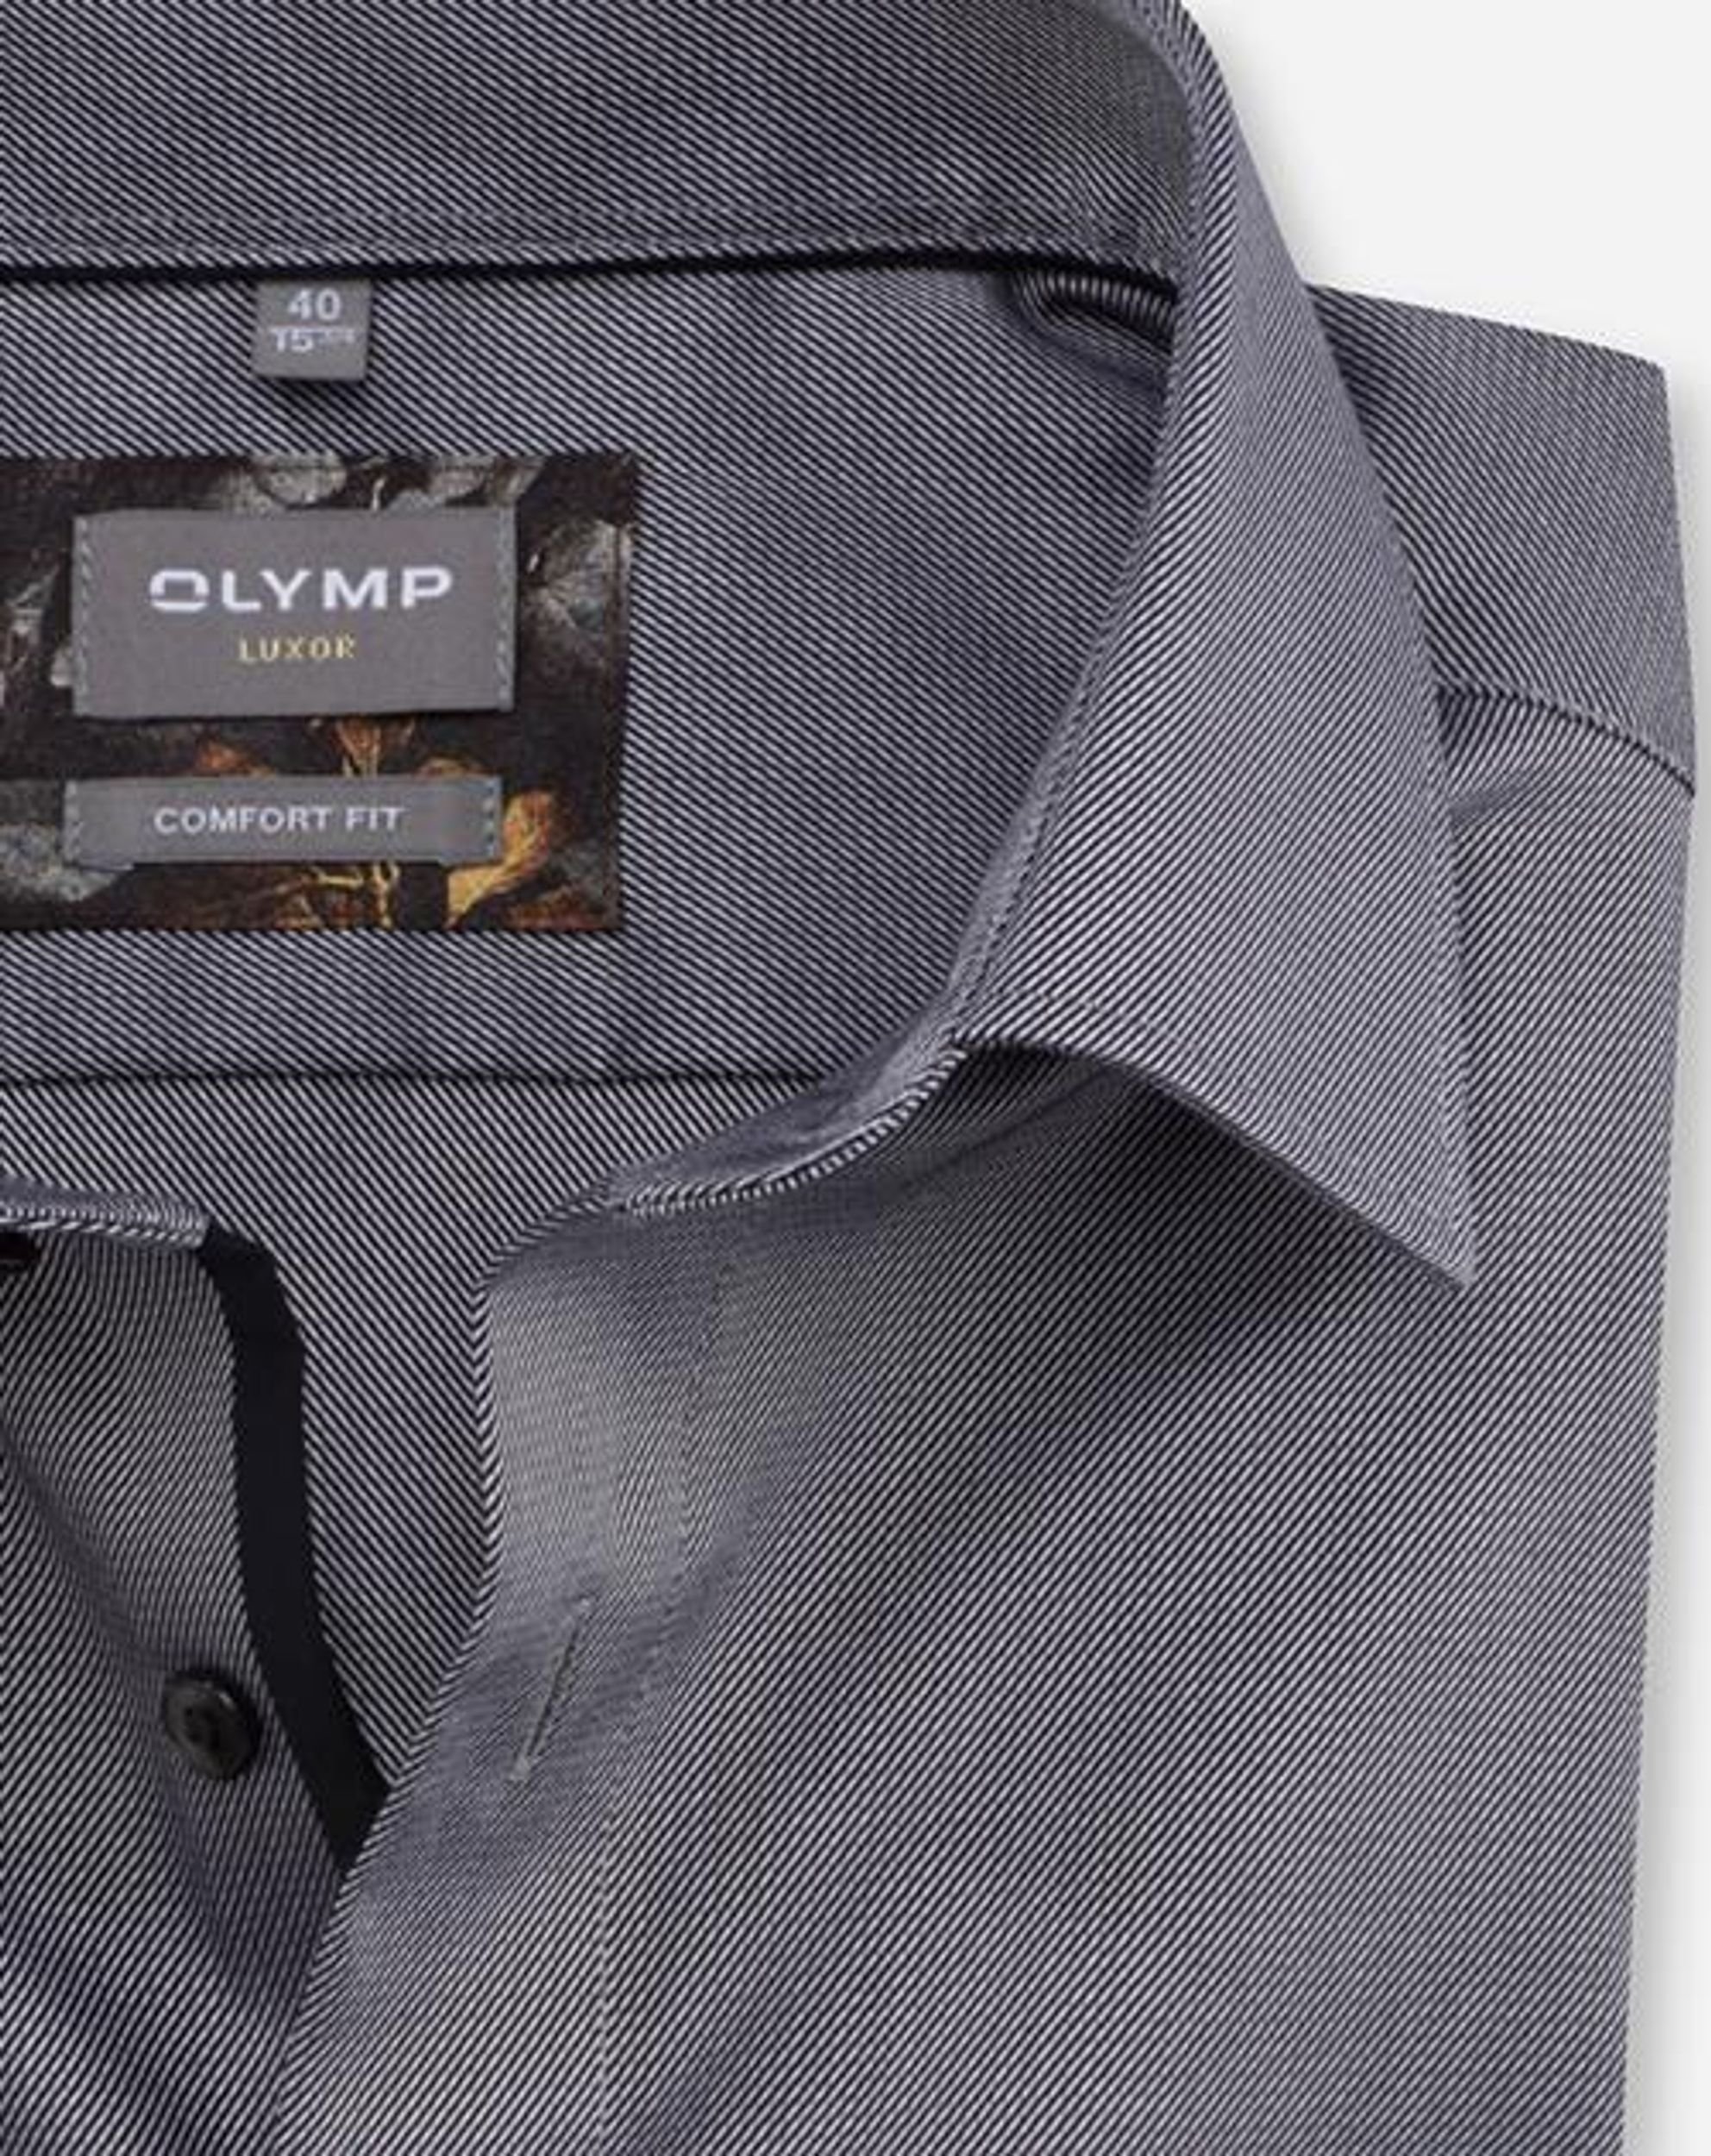 Olymp Hemd Comfort Fit 